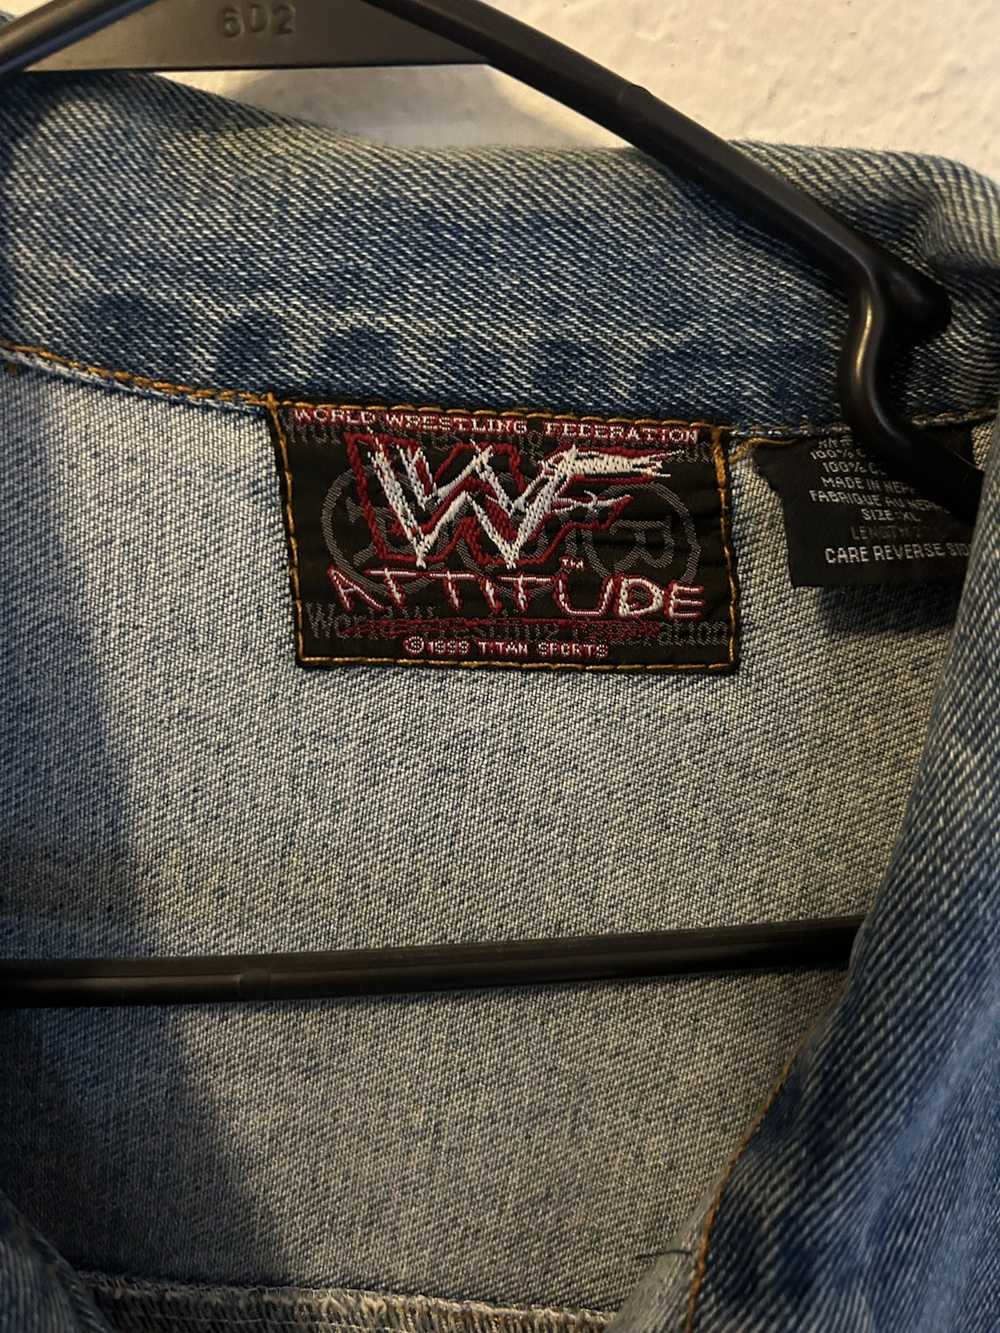 Wwe Stone cold Steve Austin WWF era Jean jacket - image 3